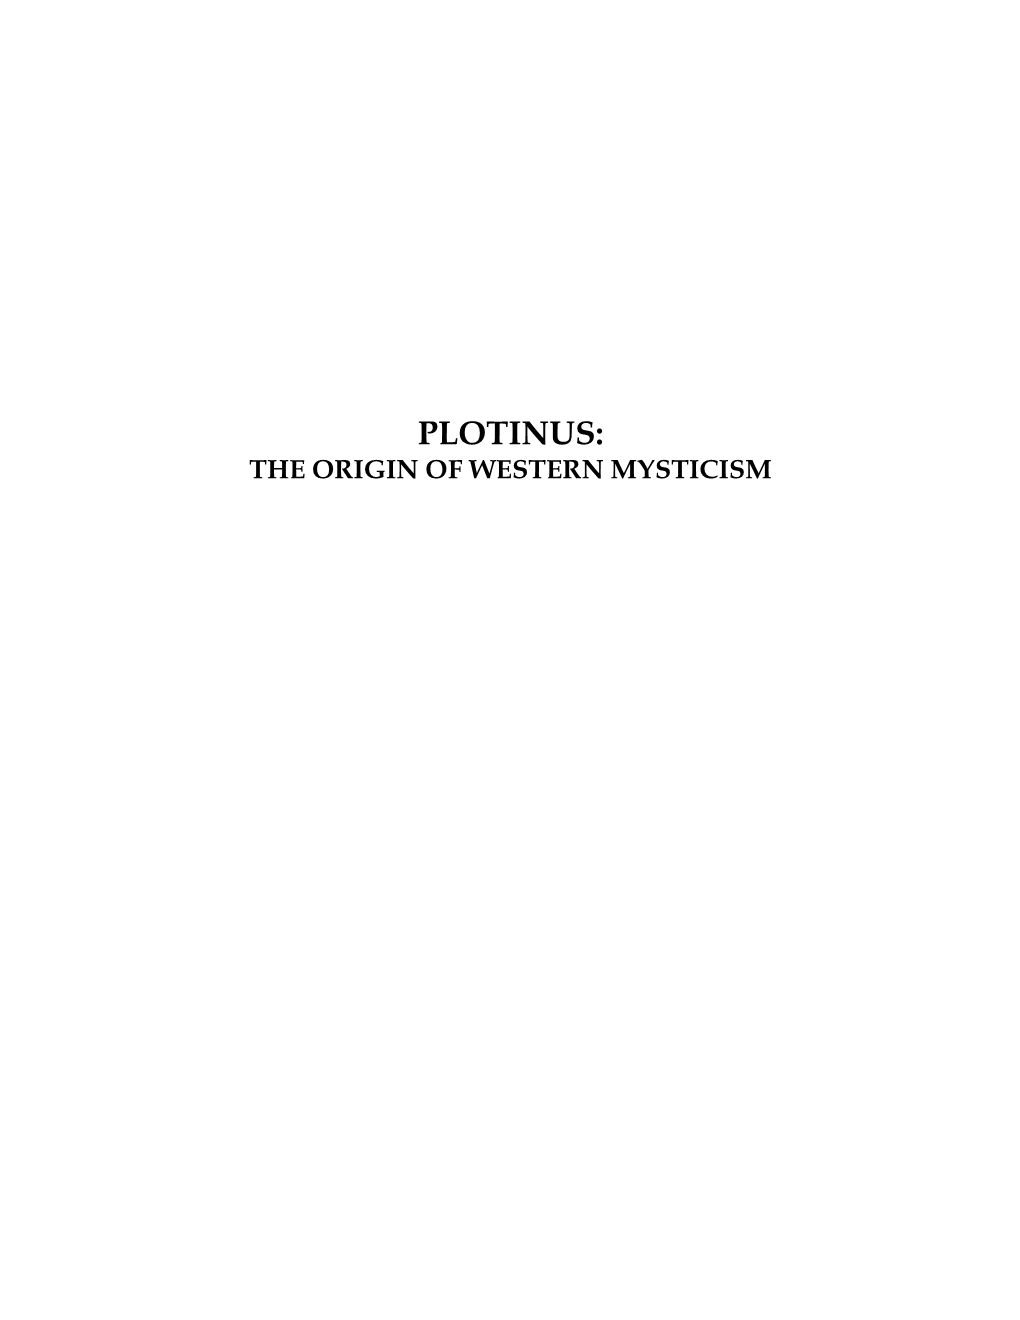 Plotinus--PDF Version